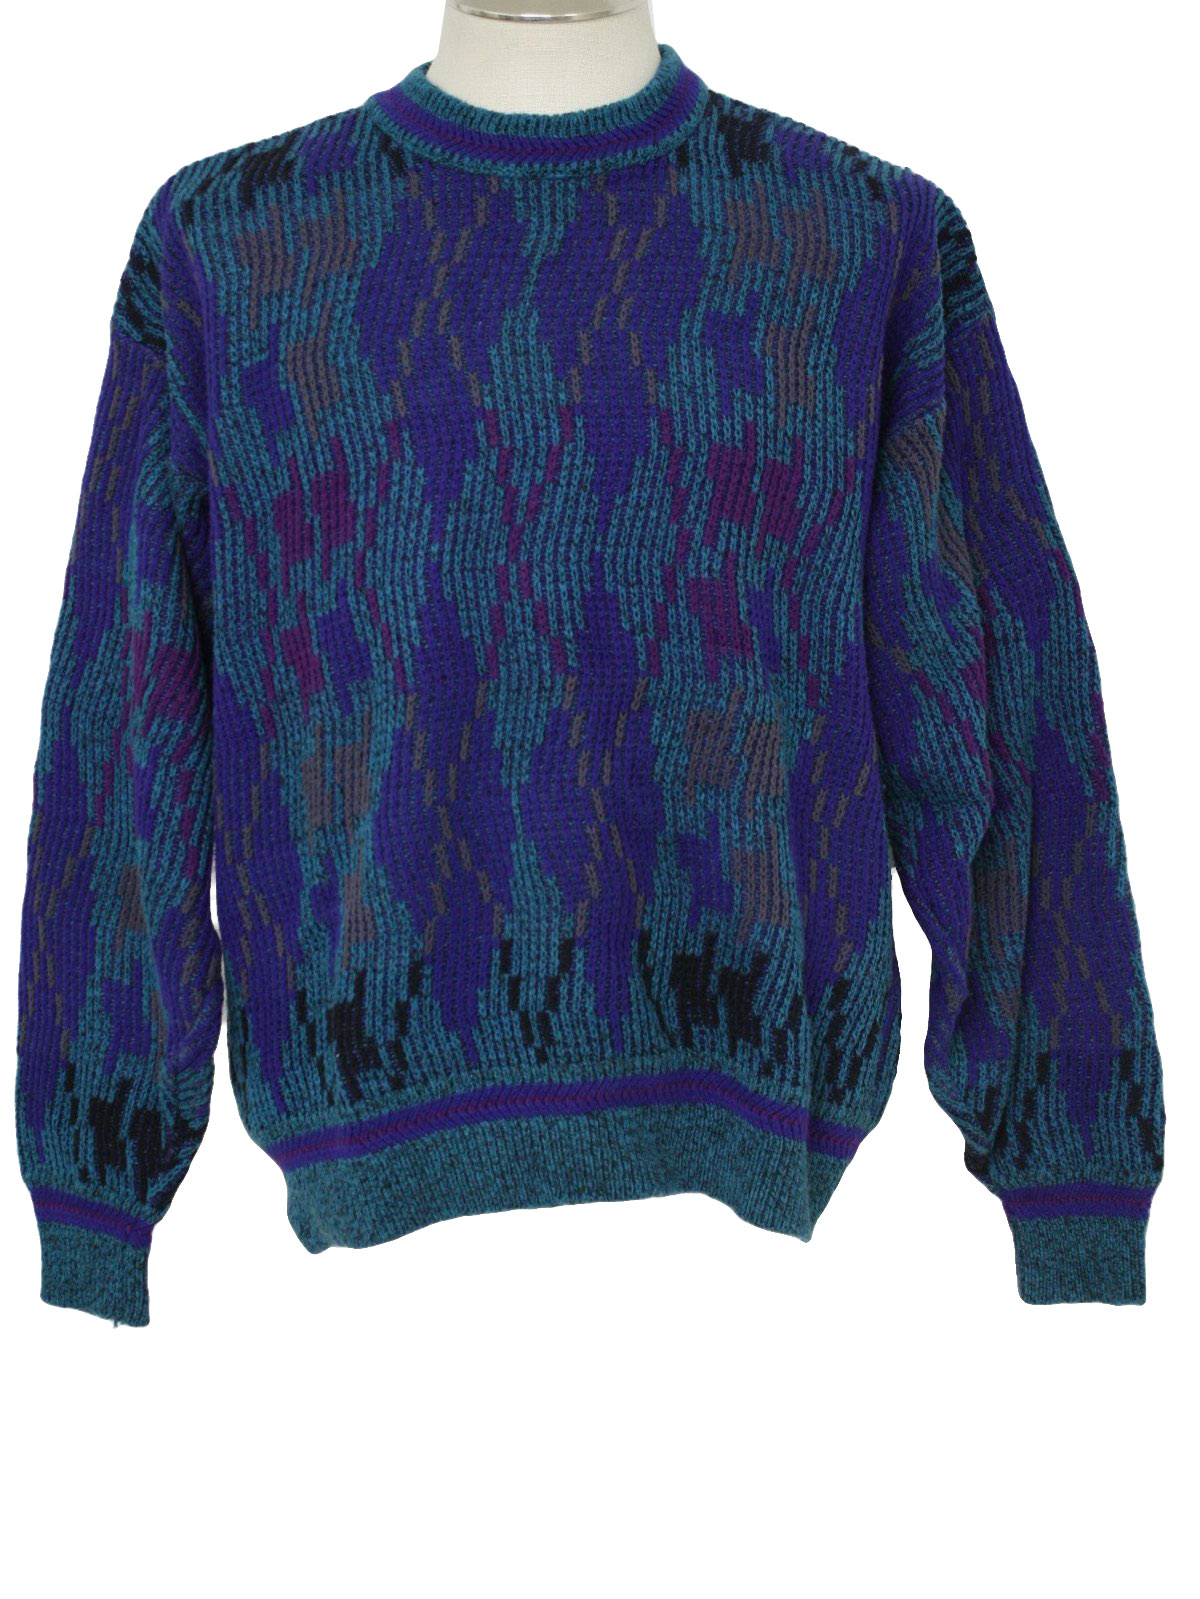 Retro 1980's Sweater (Alexander Julian) : 80s -Alexander Julian- Mens ...